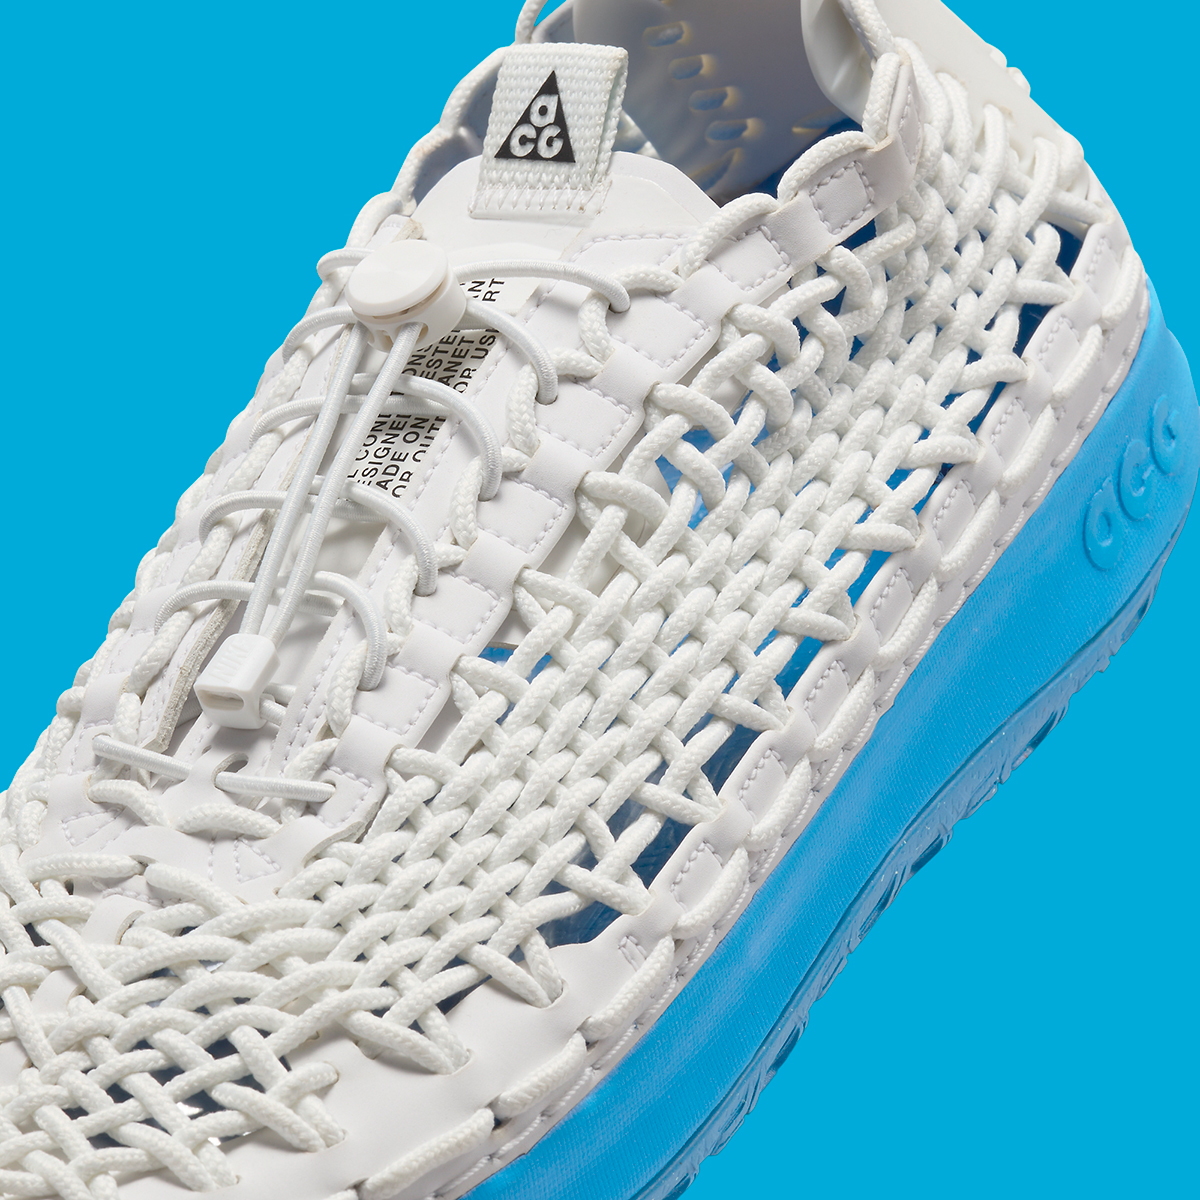 Nike Acg Watercat White Blue Fn5202 100 2